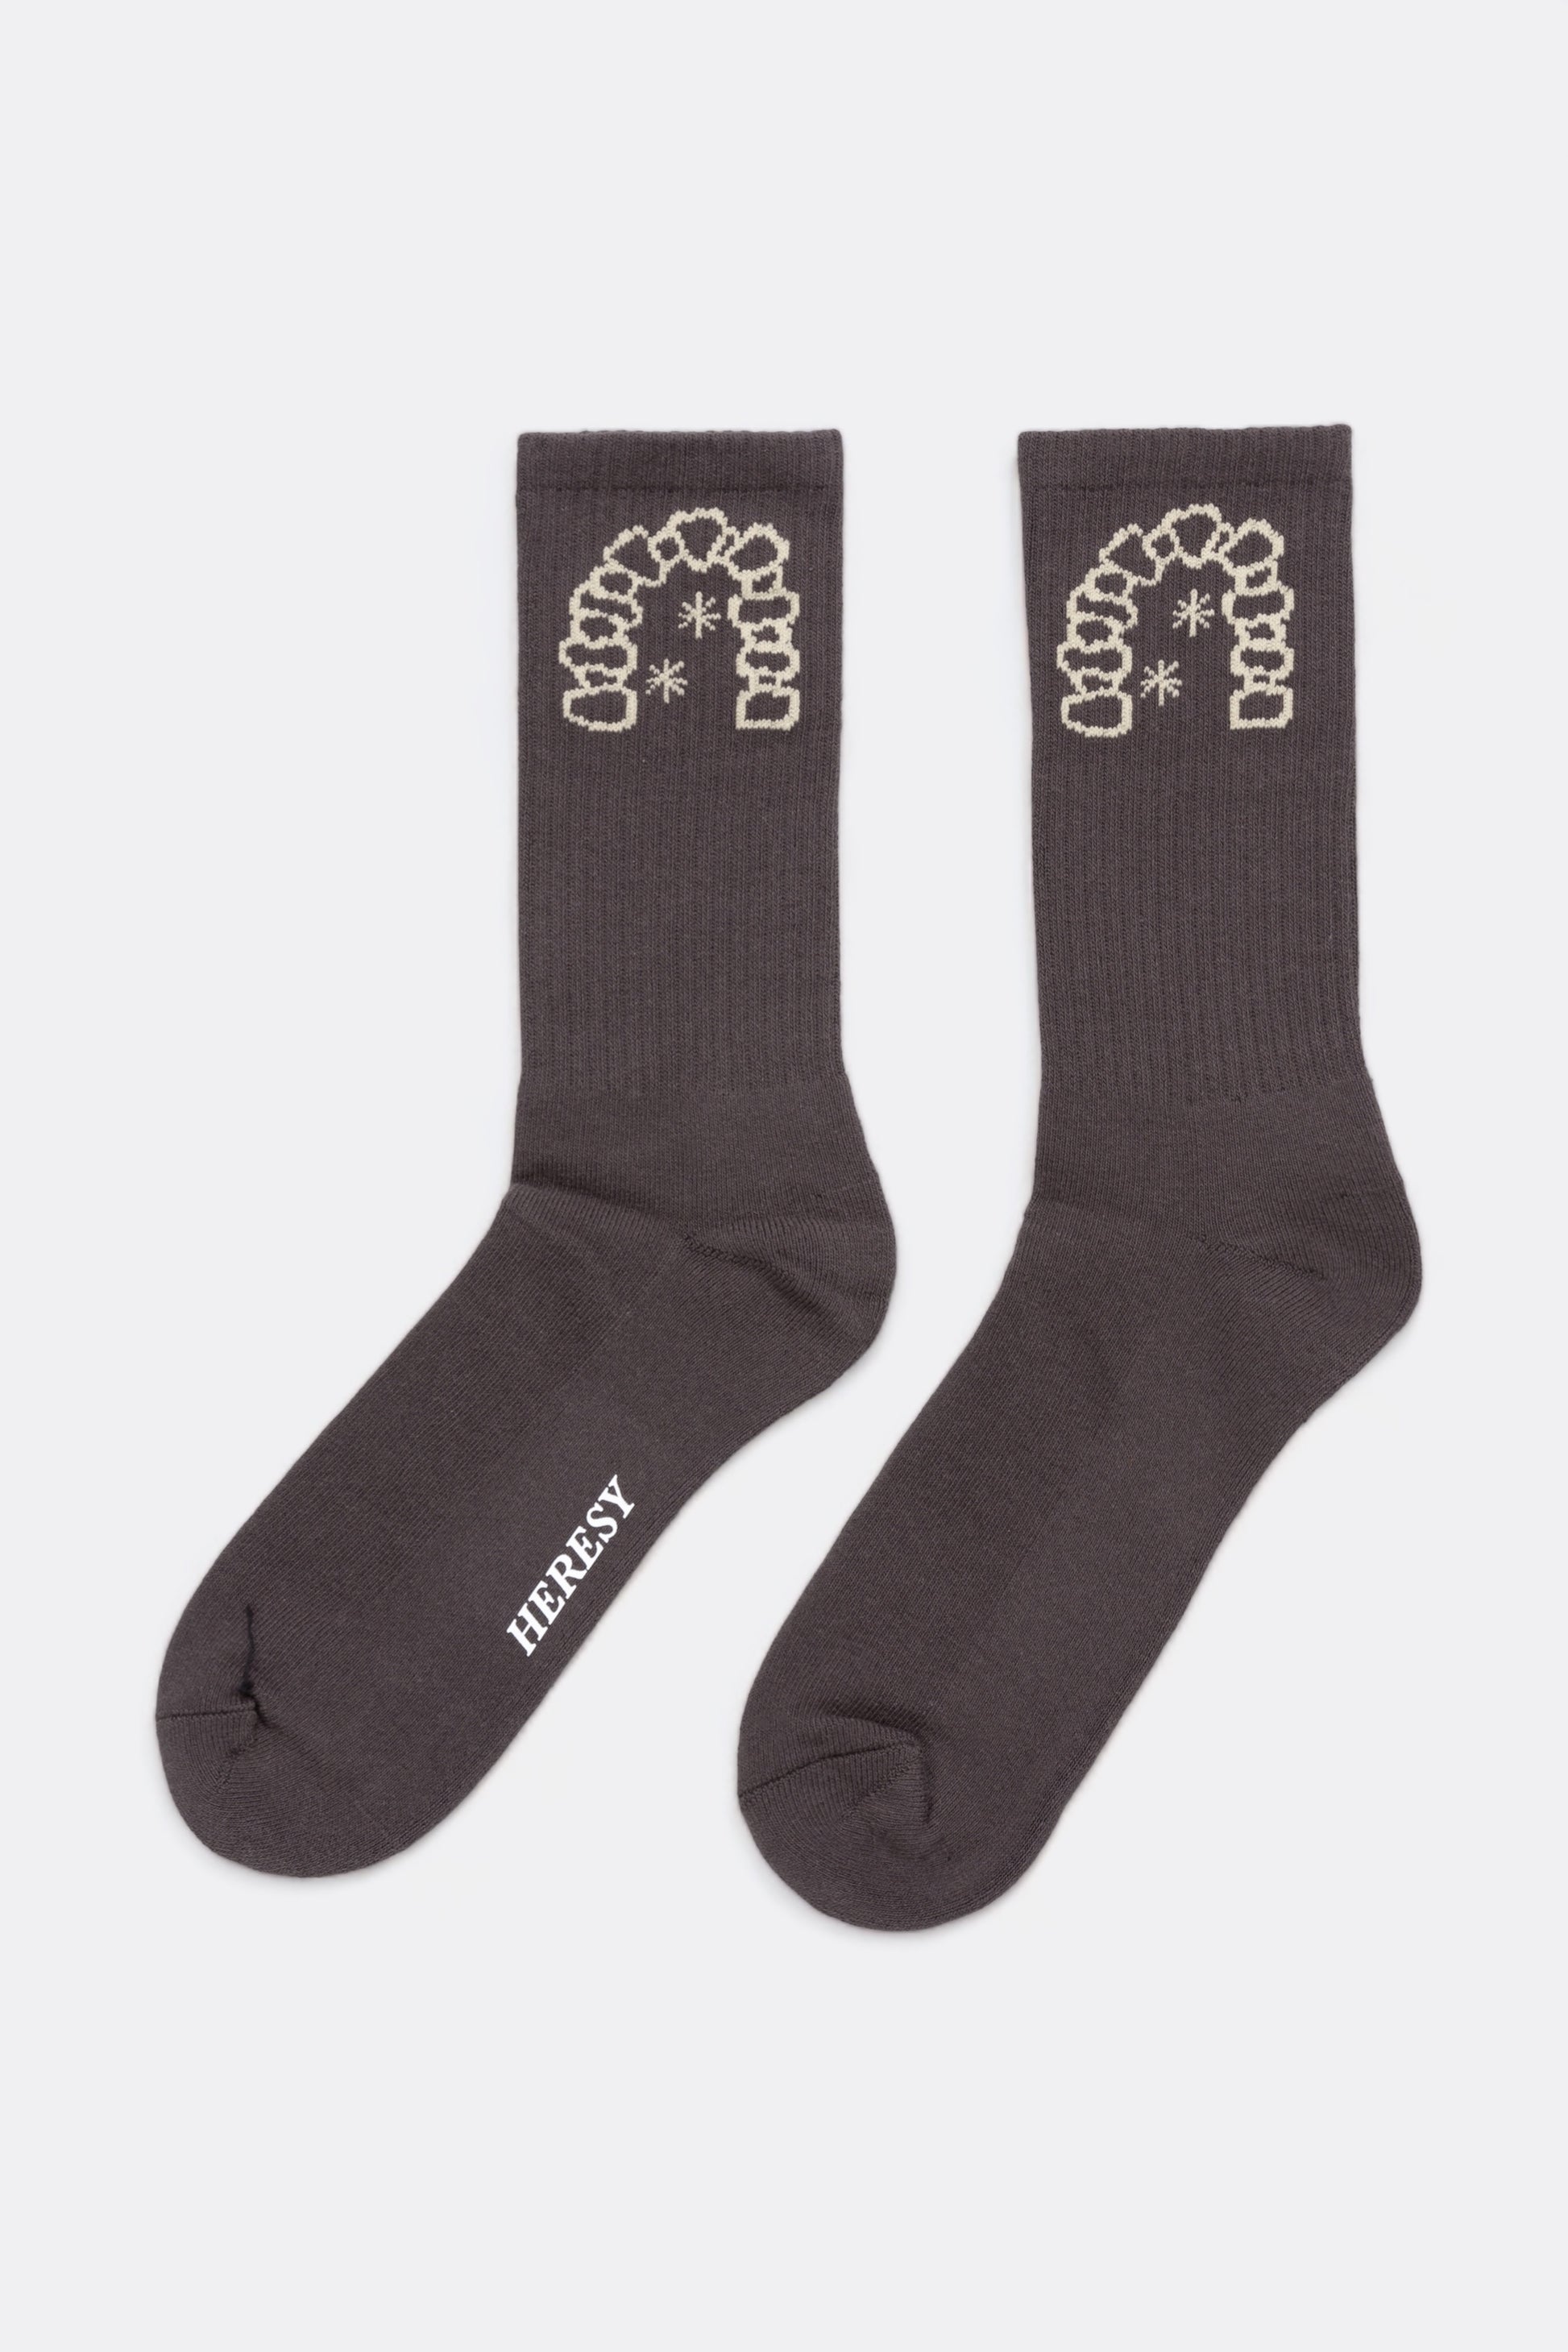 Heresy - Arch Socks (Black)